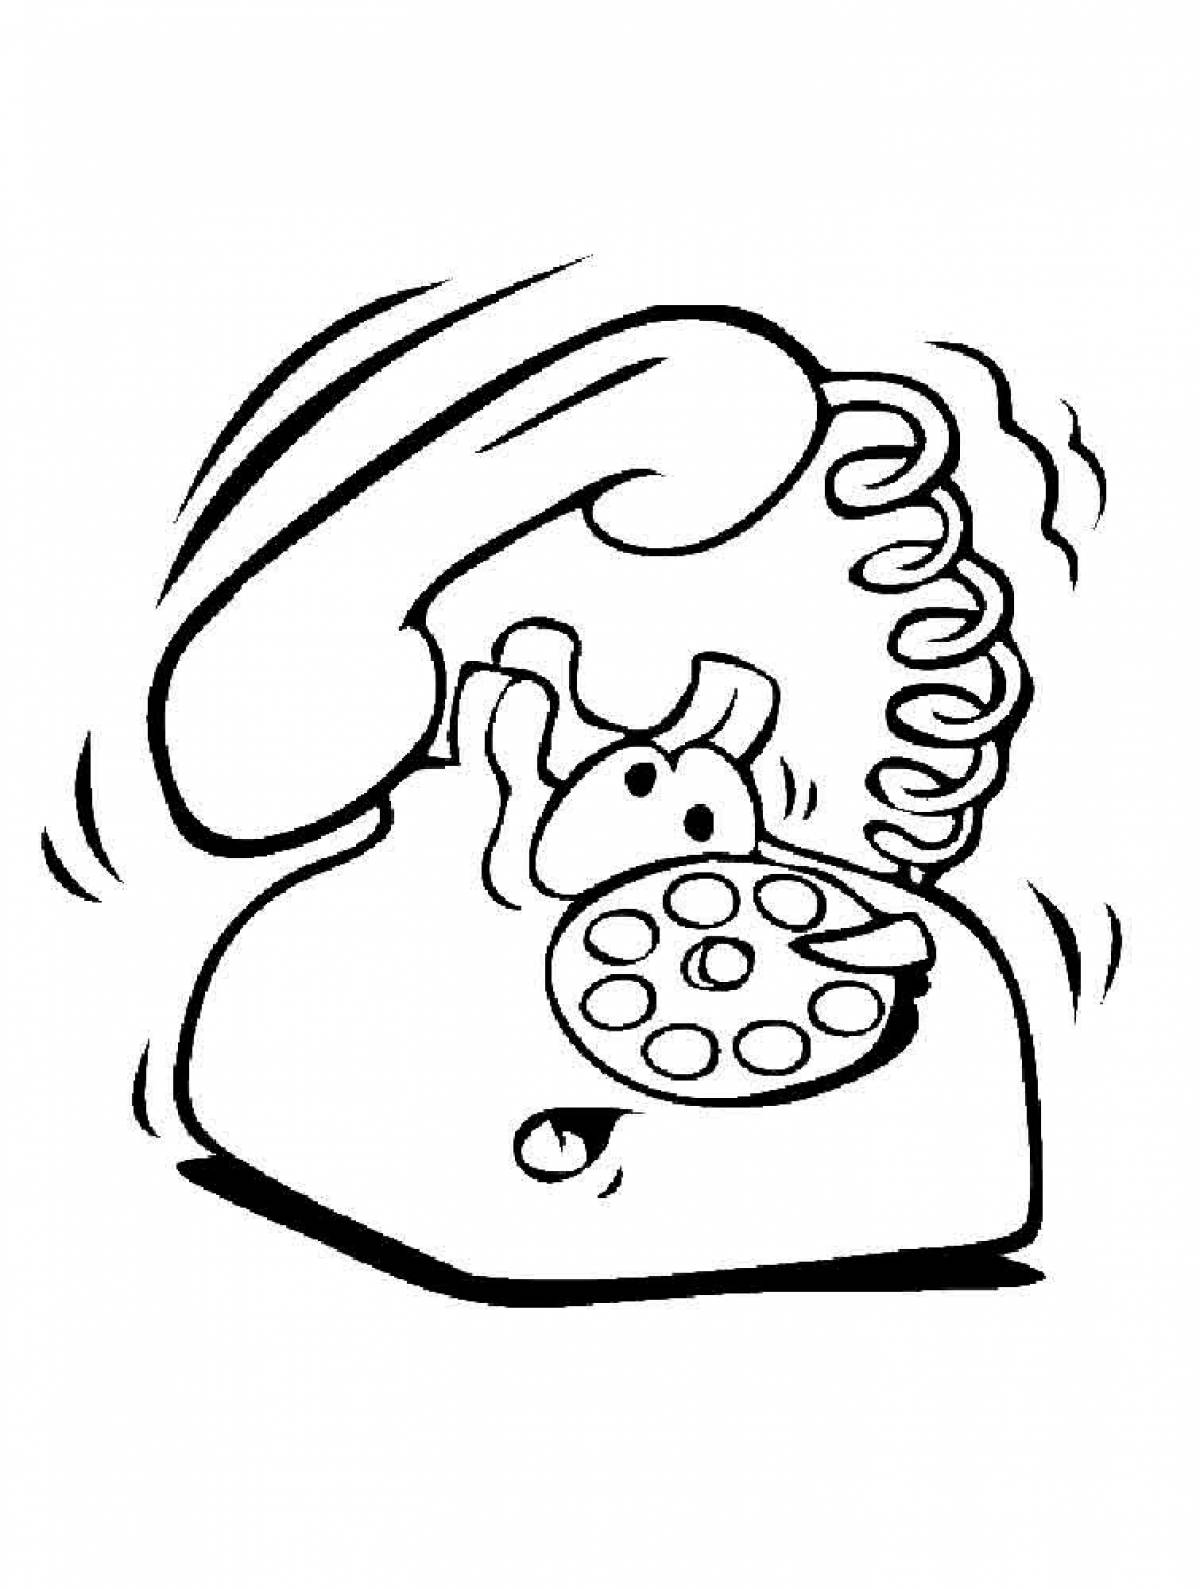 Ringing phone